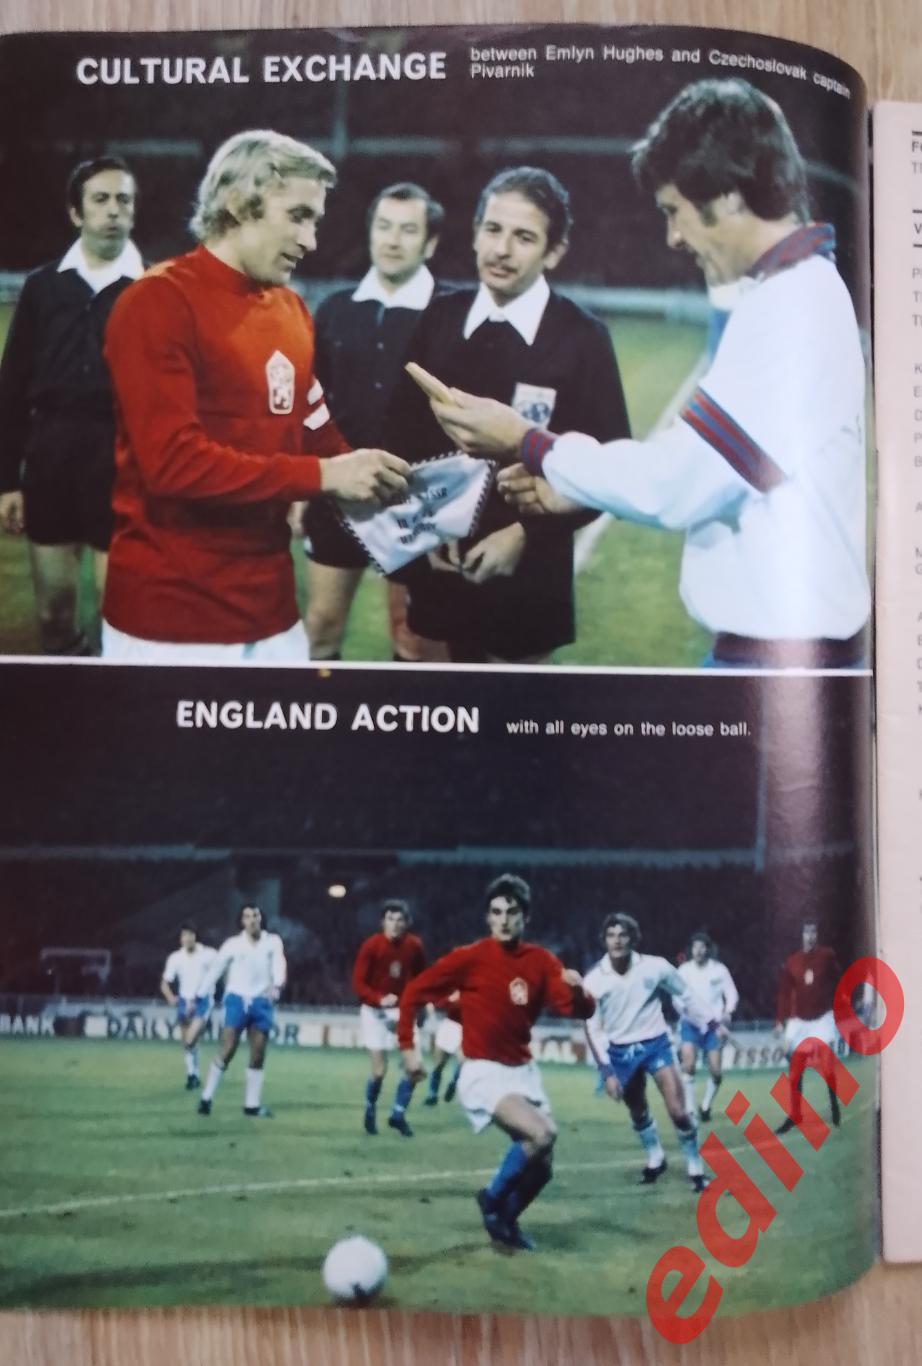 Football As News1974г. Шеффилд 2